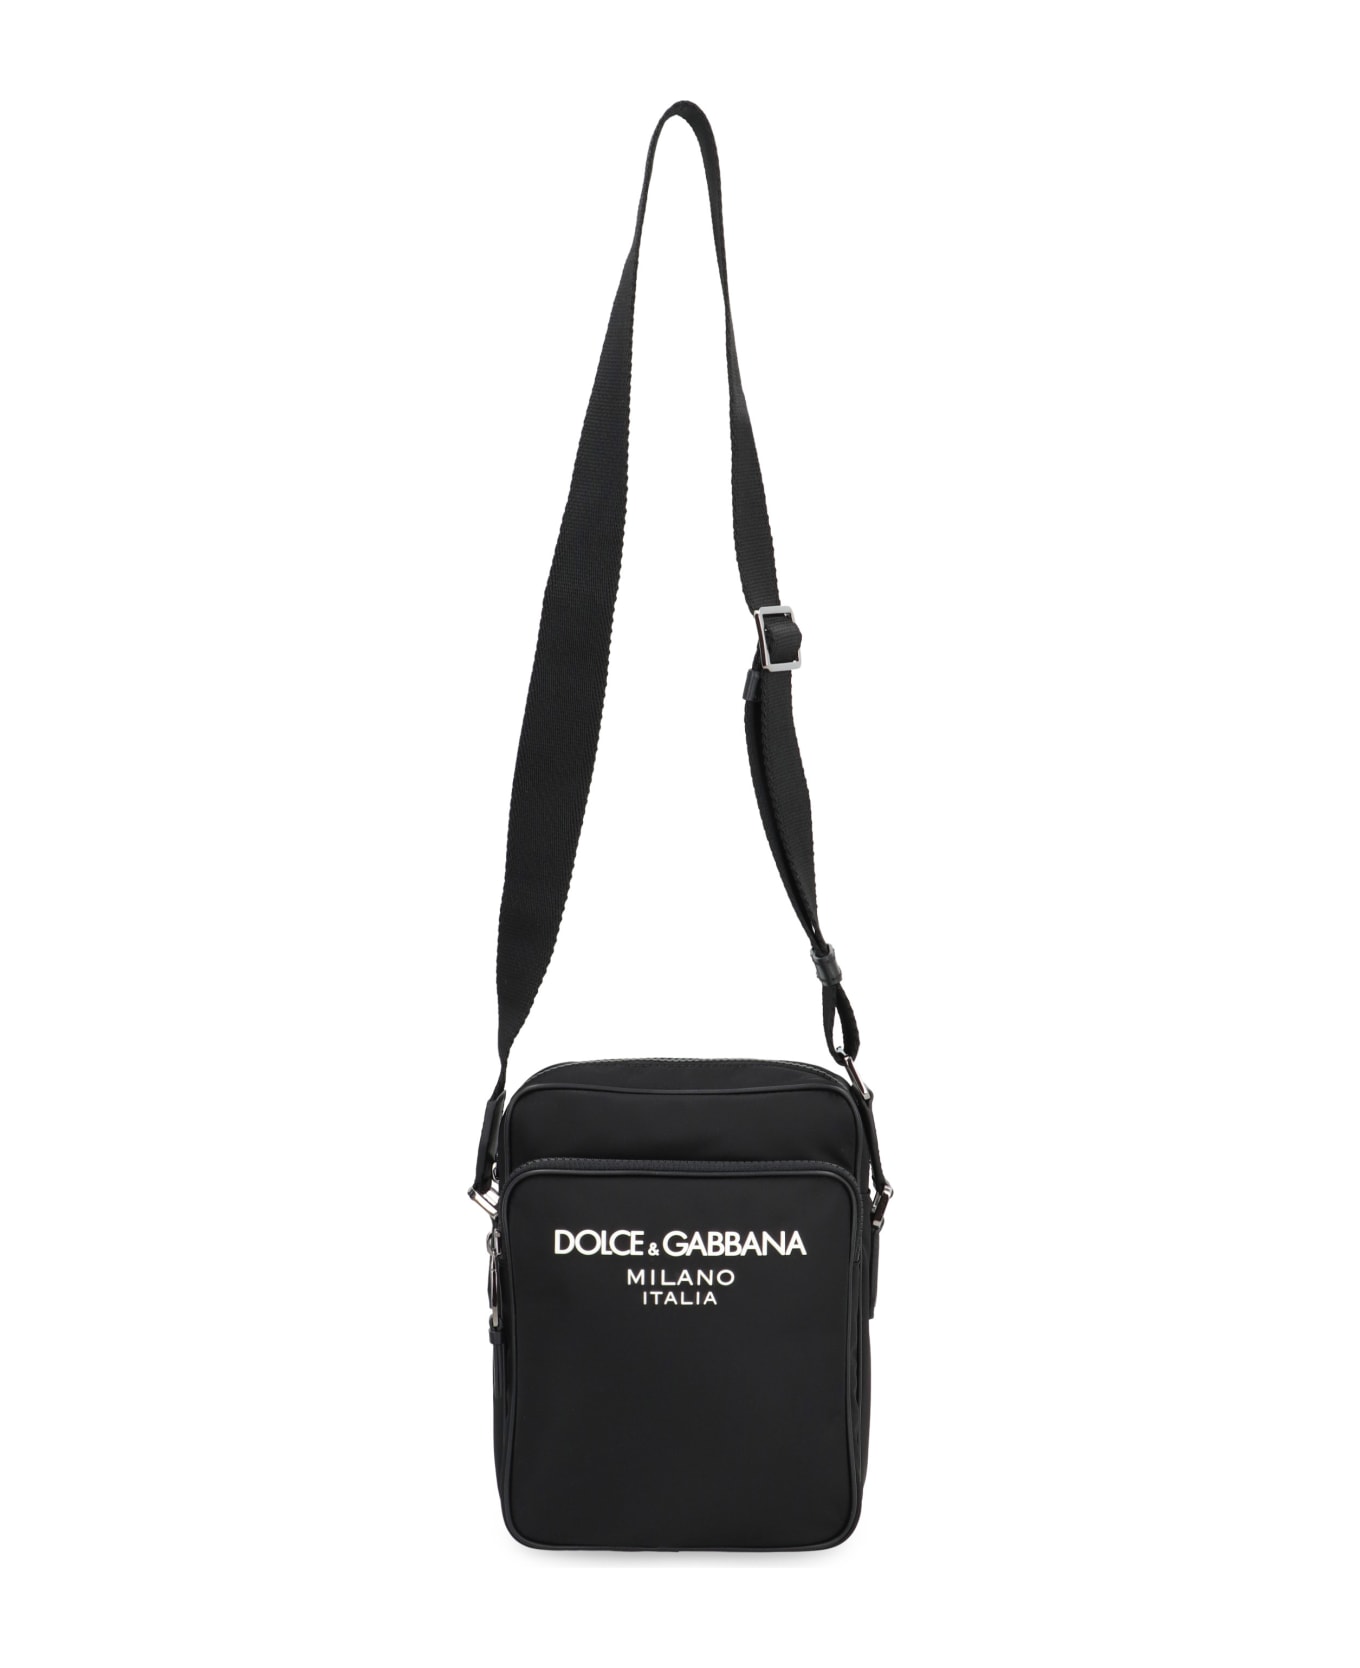 Dolce & Gabbana Nylon Messenger Bag - black ショルダーバッグ